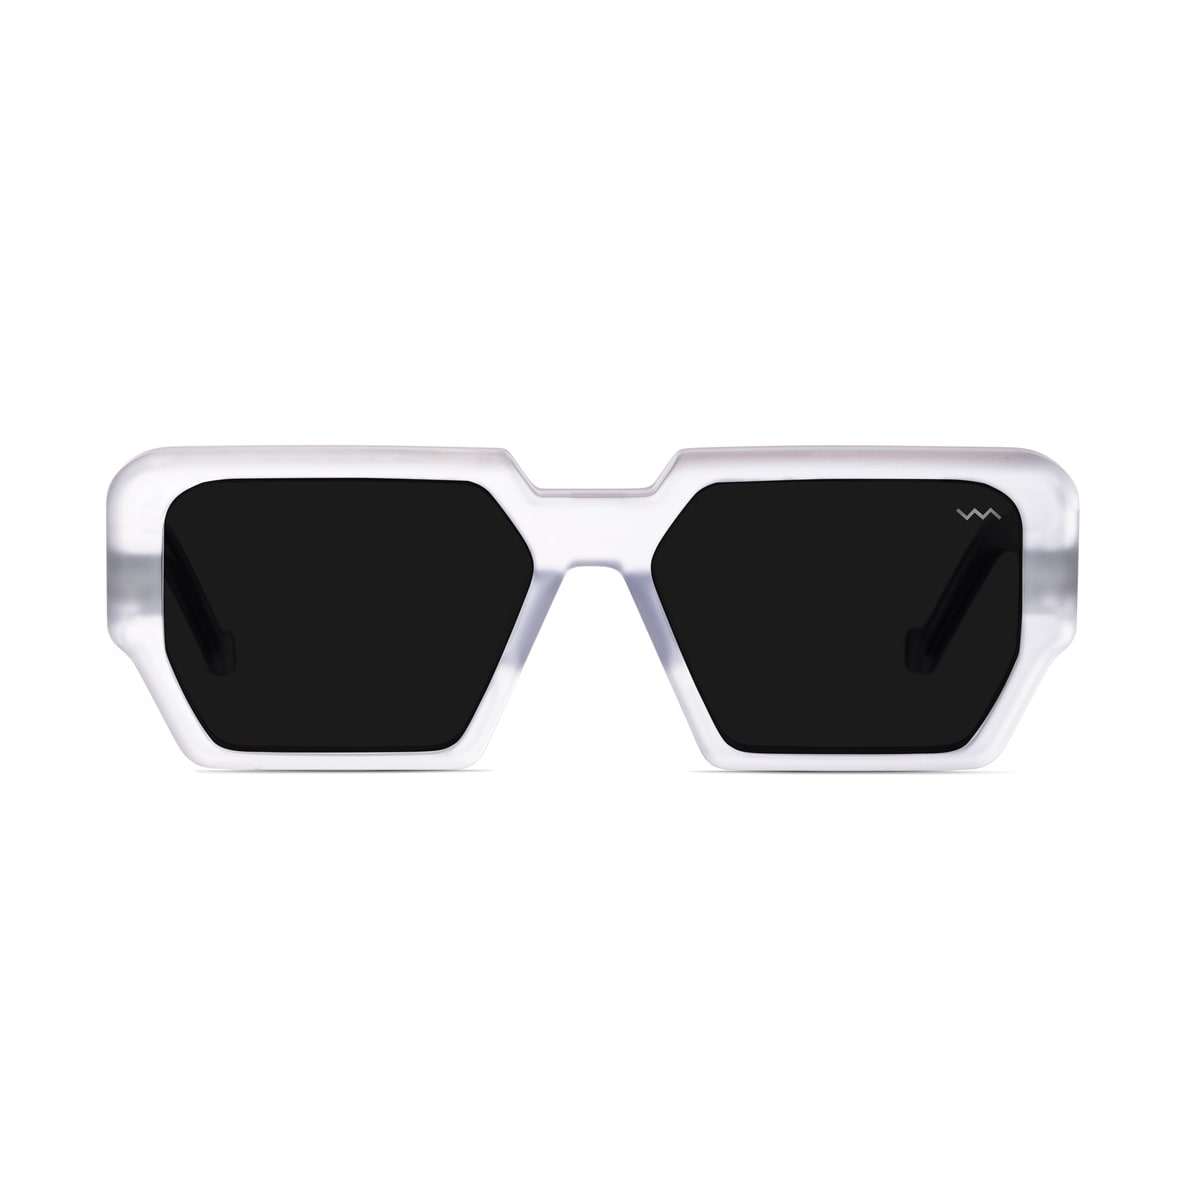 Wl0065 White Label Crystal Matte Sunglasses